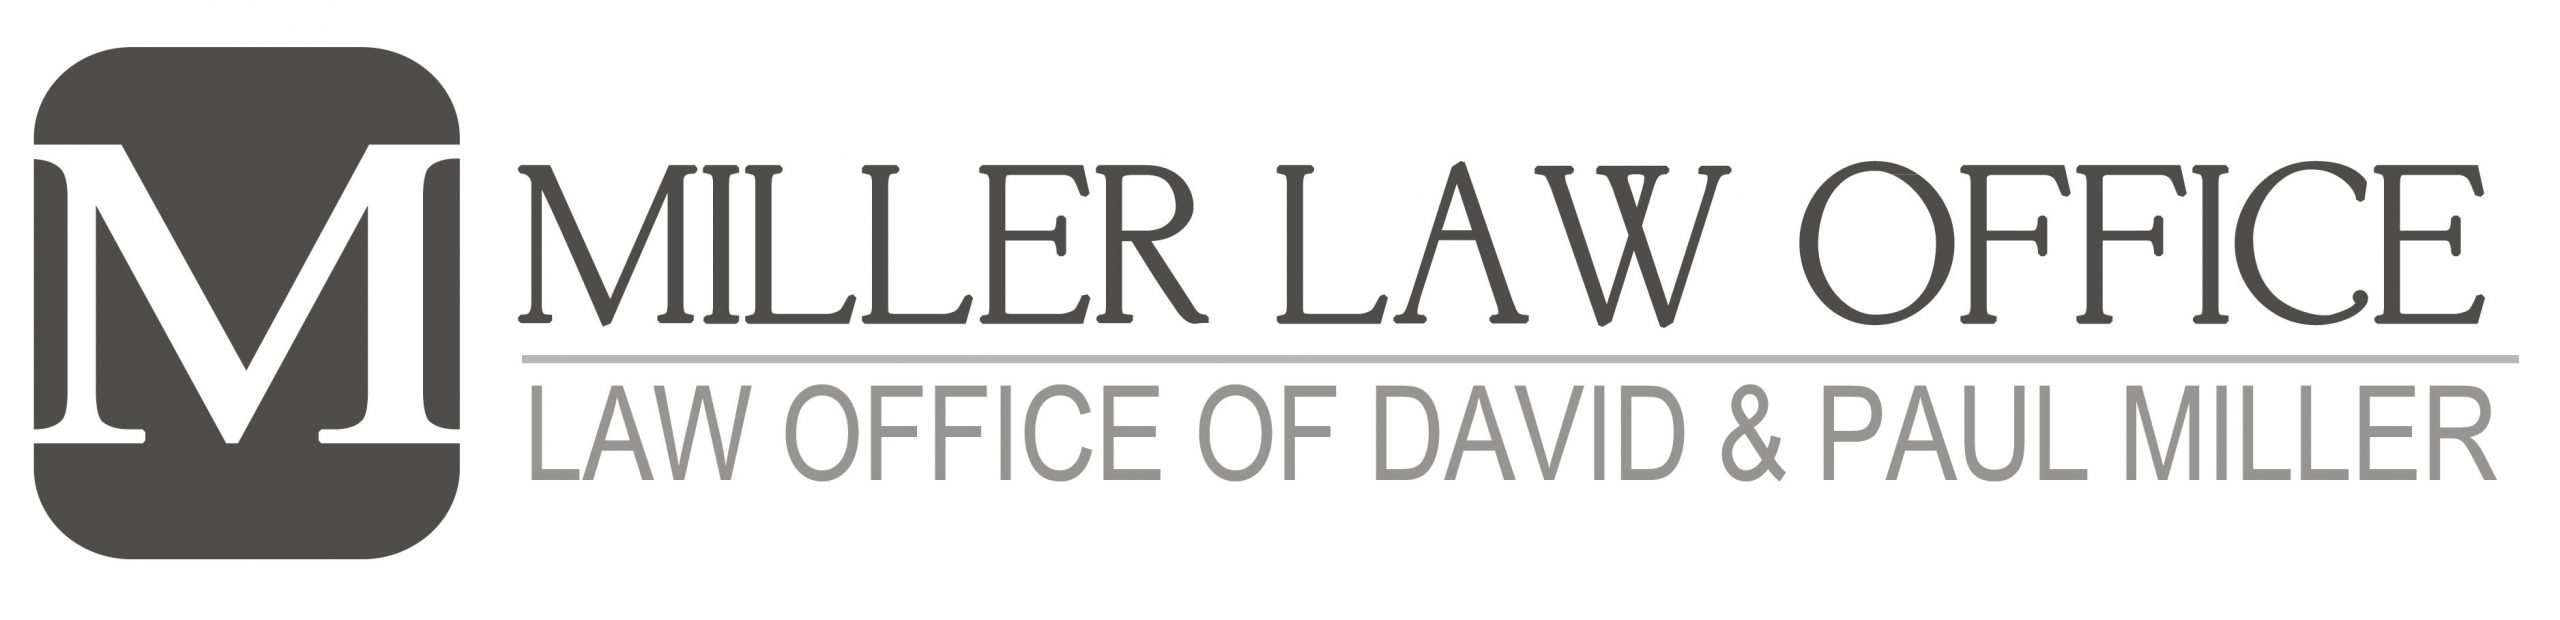 Miller Law Office logo